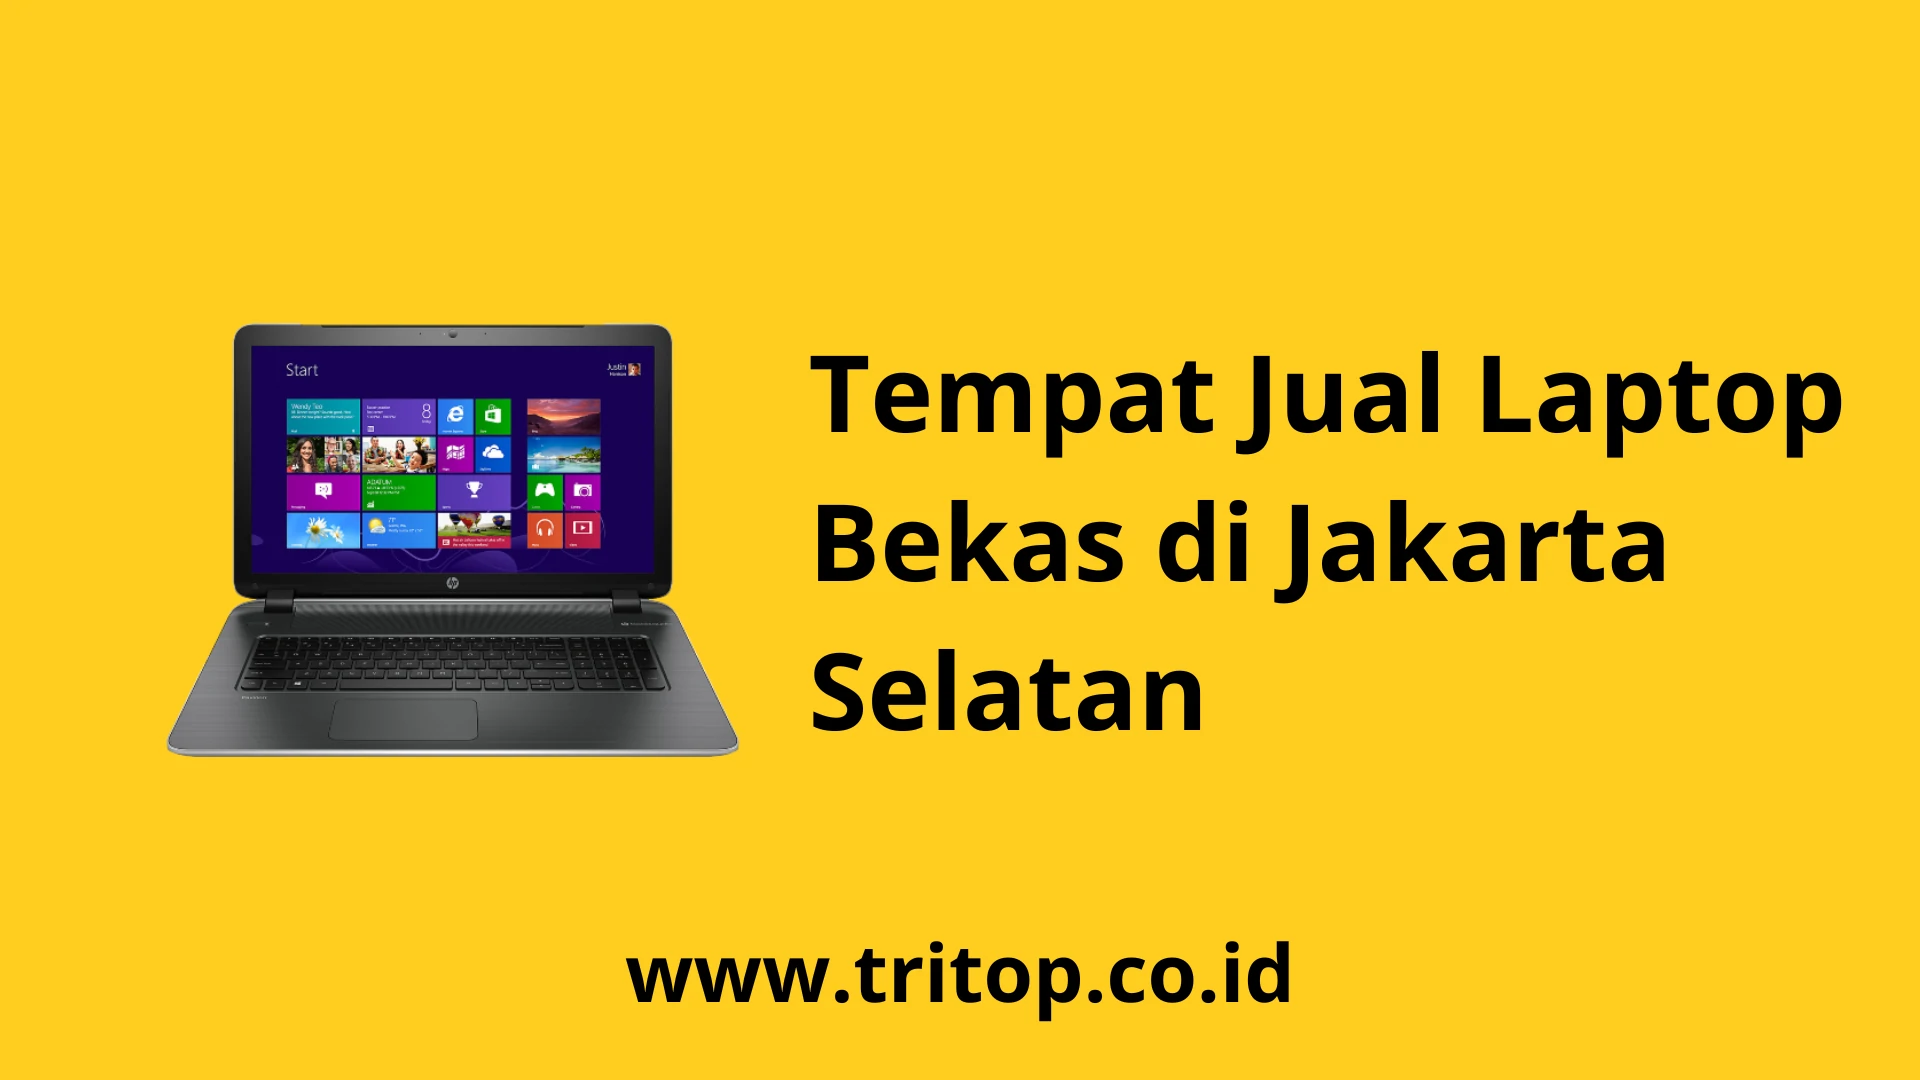 Jual Laptop Bekas Jakarta Selatan Tritop.co.id